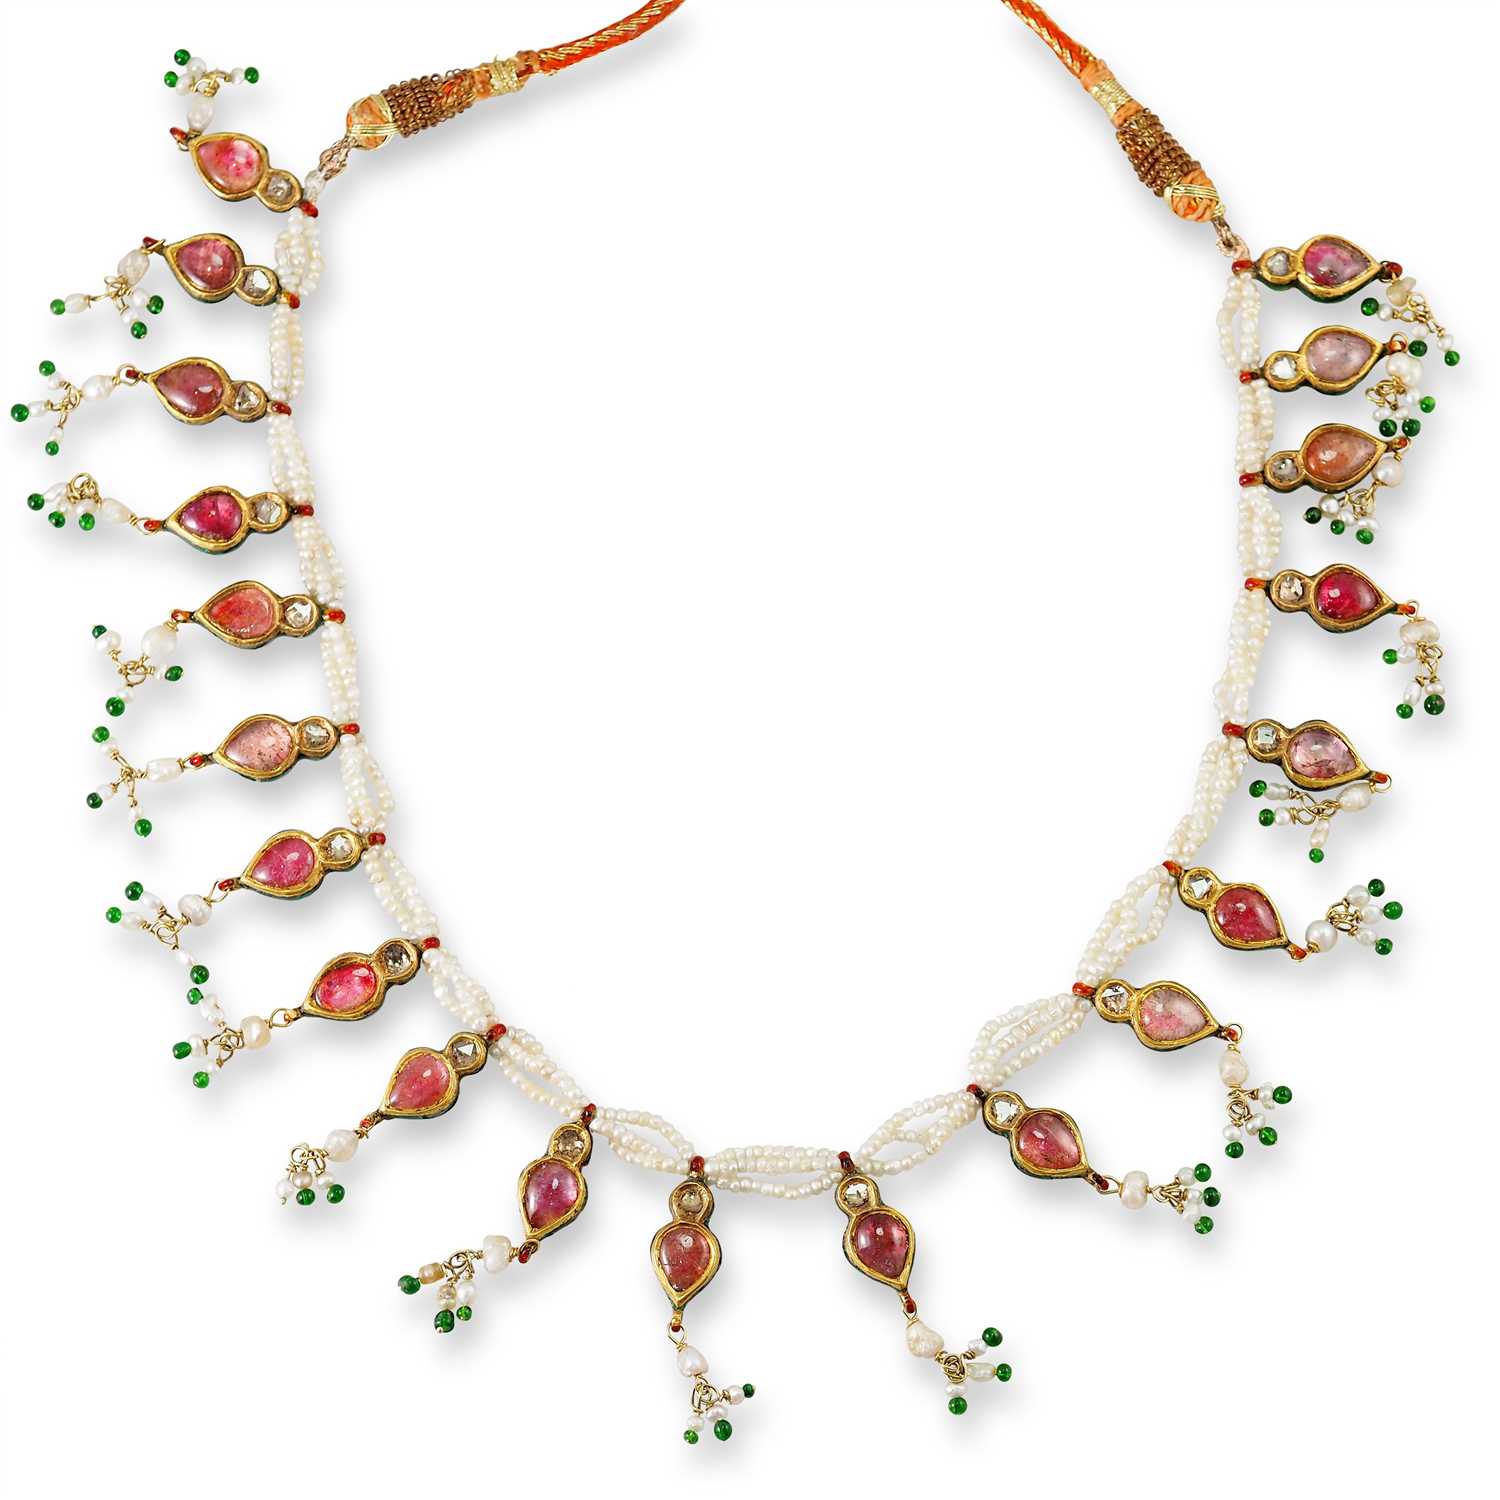 Lot 520 - A Pearl, 20K Gold, Gem-Set, Enamel, Mughal Style Necklace